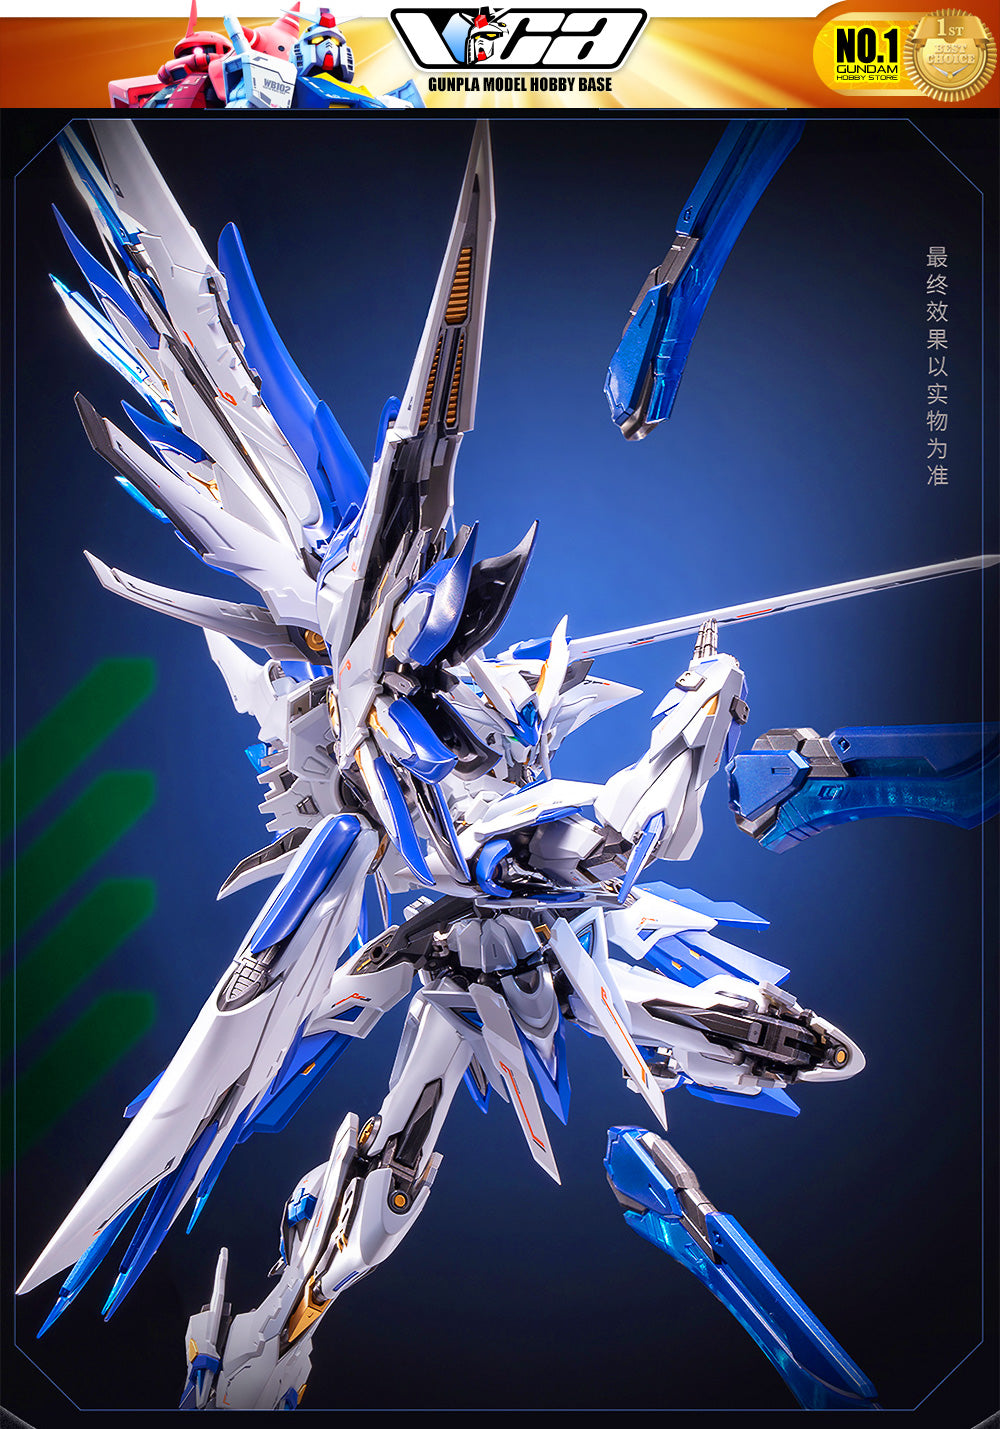 Moshow x HobbyMecha Jing Wei 帝女雀·精卫 Metal Structure Premium Build Action Figure VCA Gundam Singapore